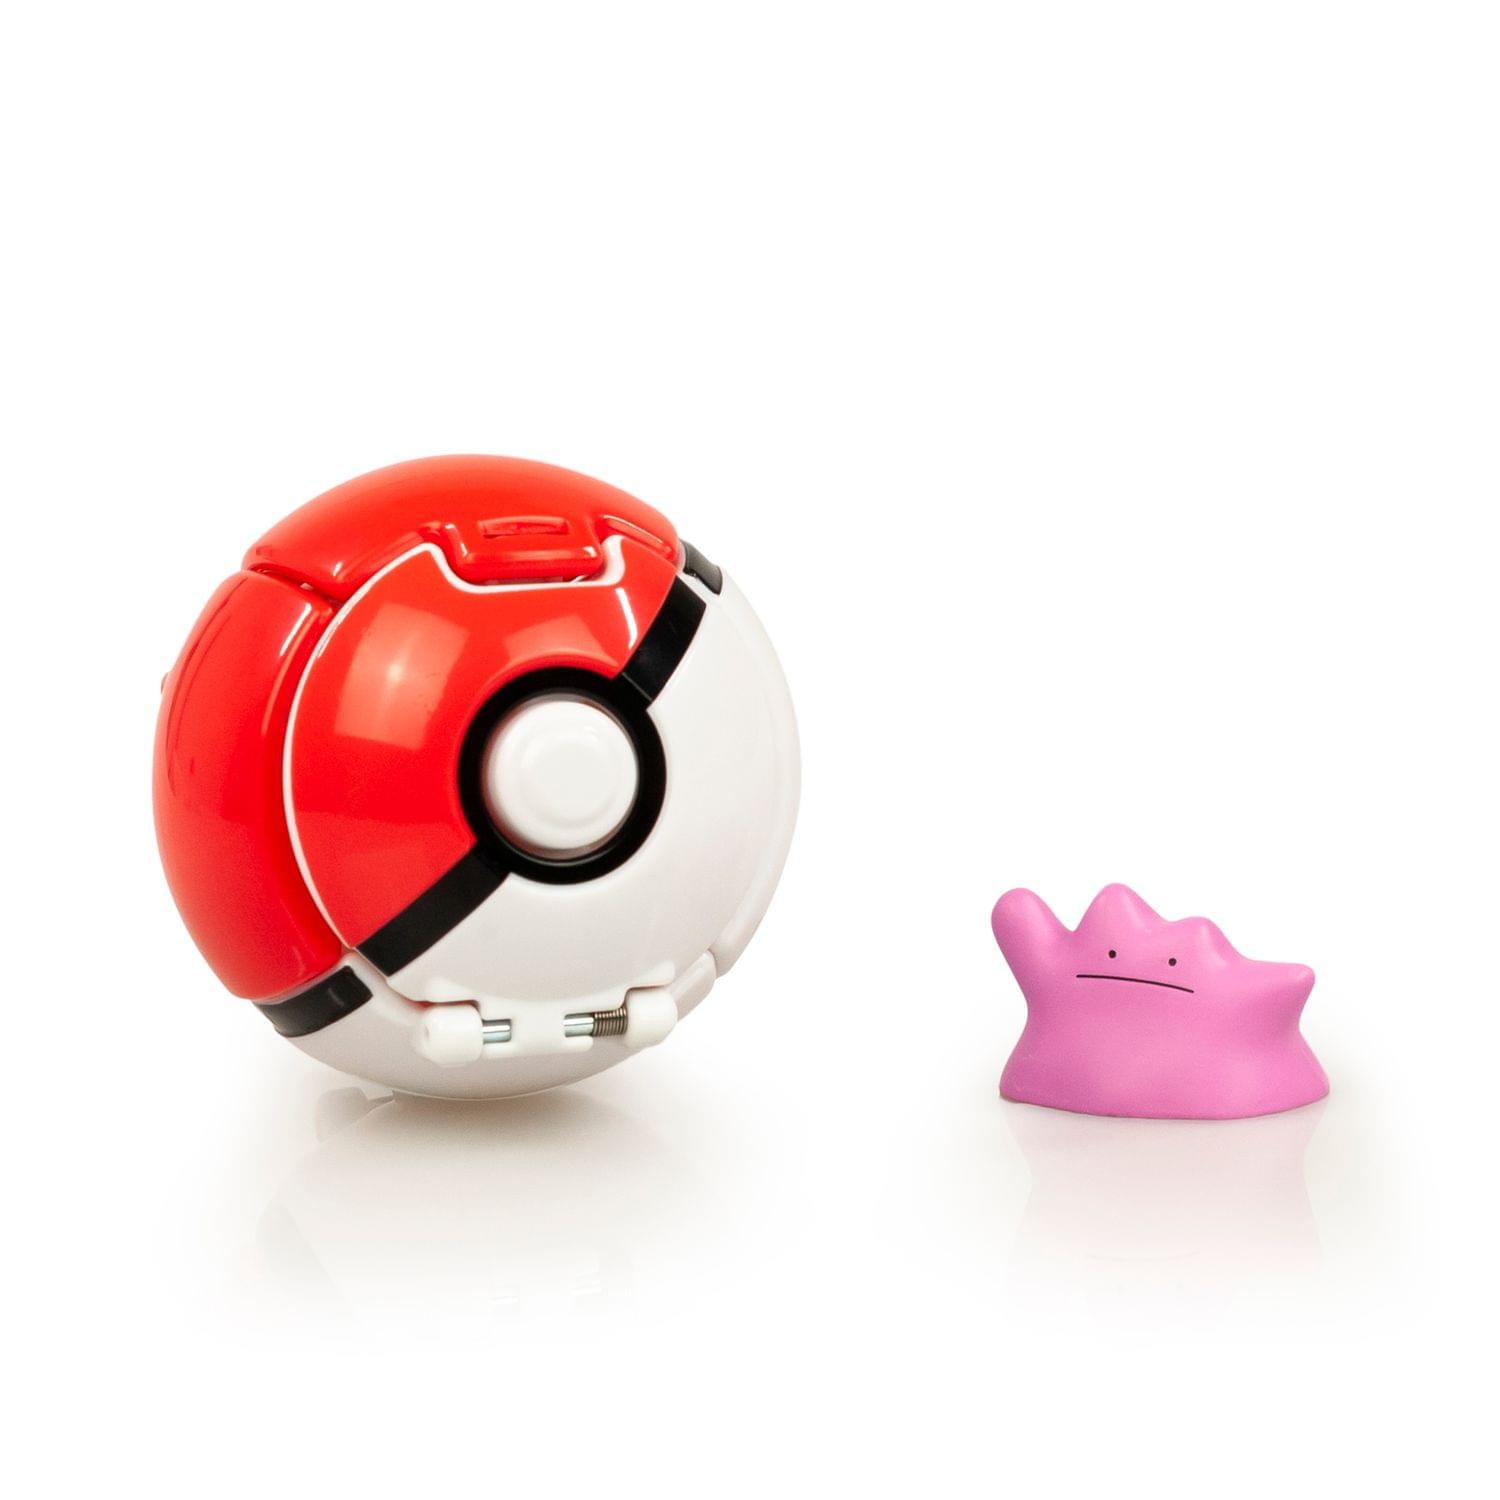 Pokémon Throw 'N' Pop Poké Ball & Ditto Set | Includes Ball & 2" Ditto Figure